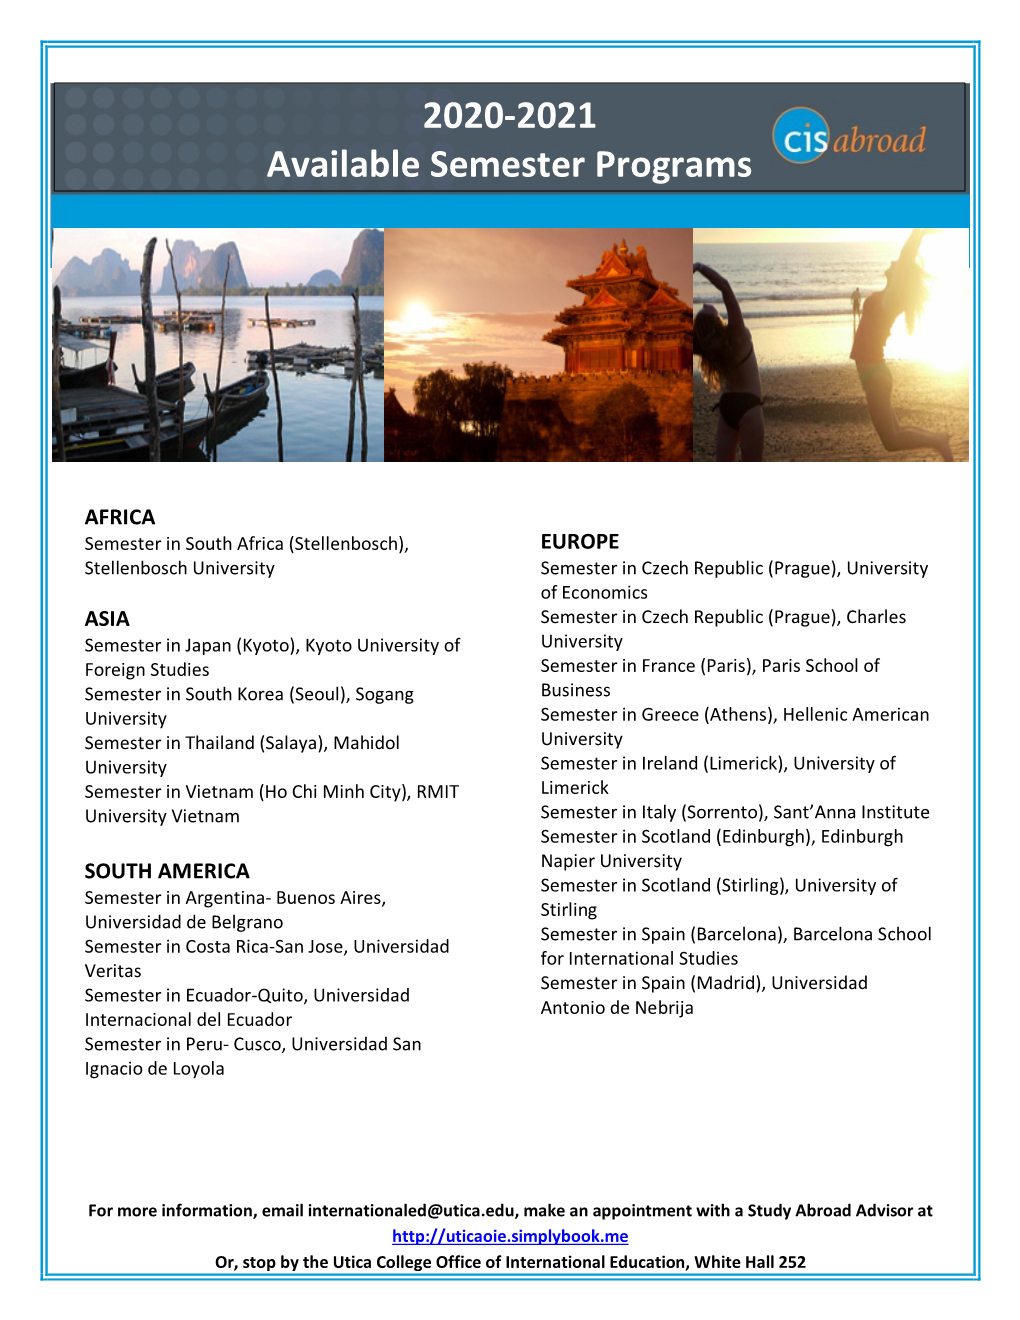 2020-2021 Available Semester Programs